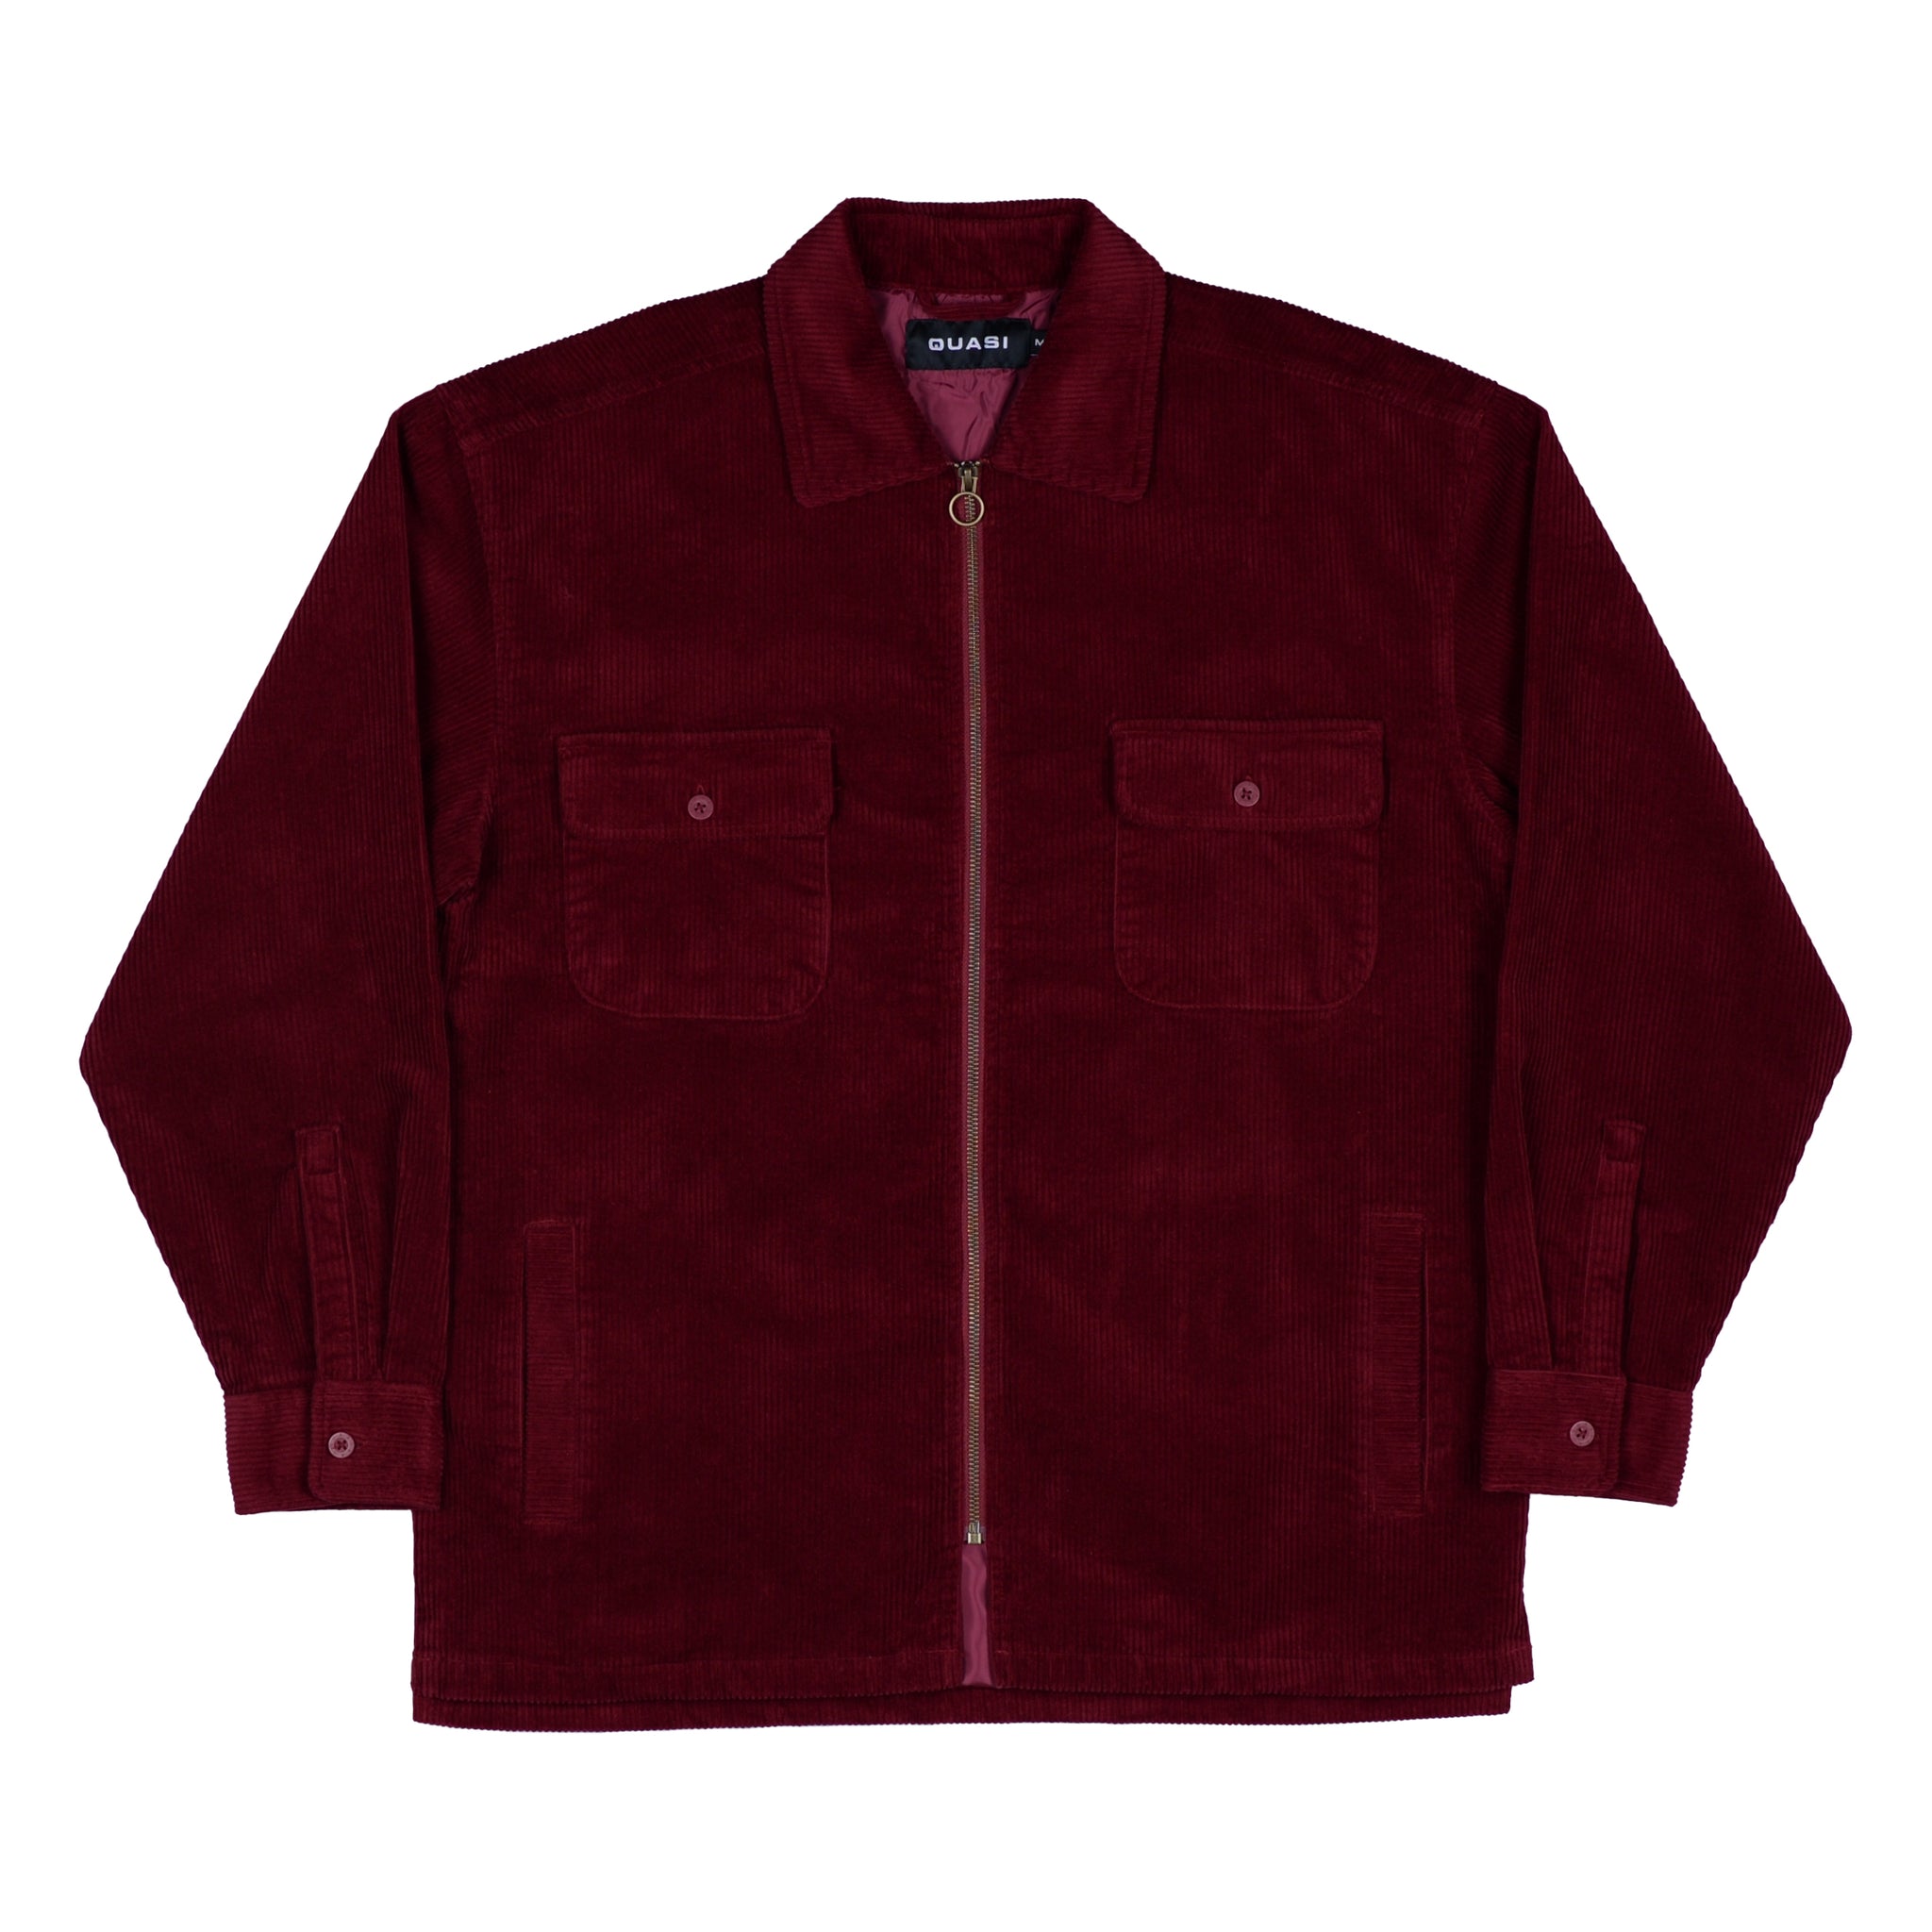 QUASI - Corduroy Shirt Jacket "Burgundy"